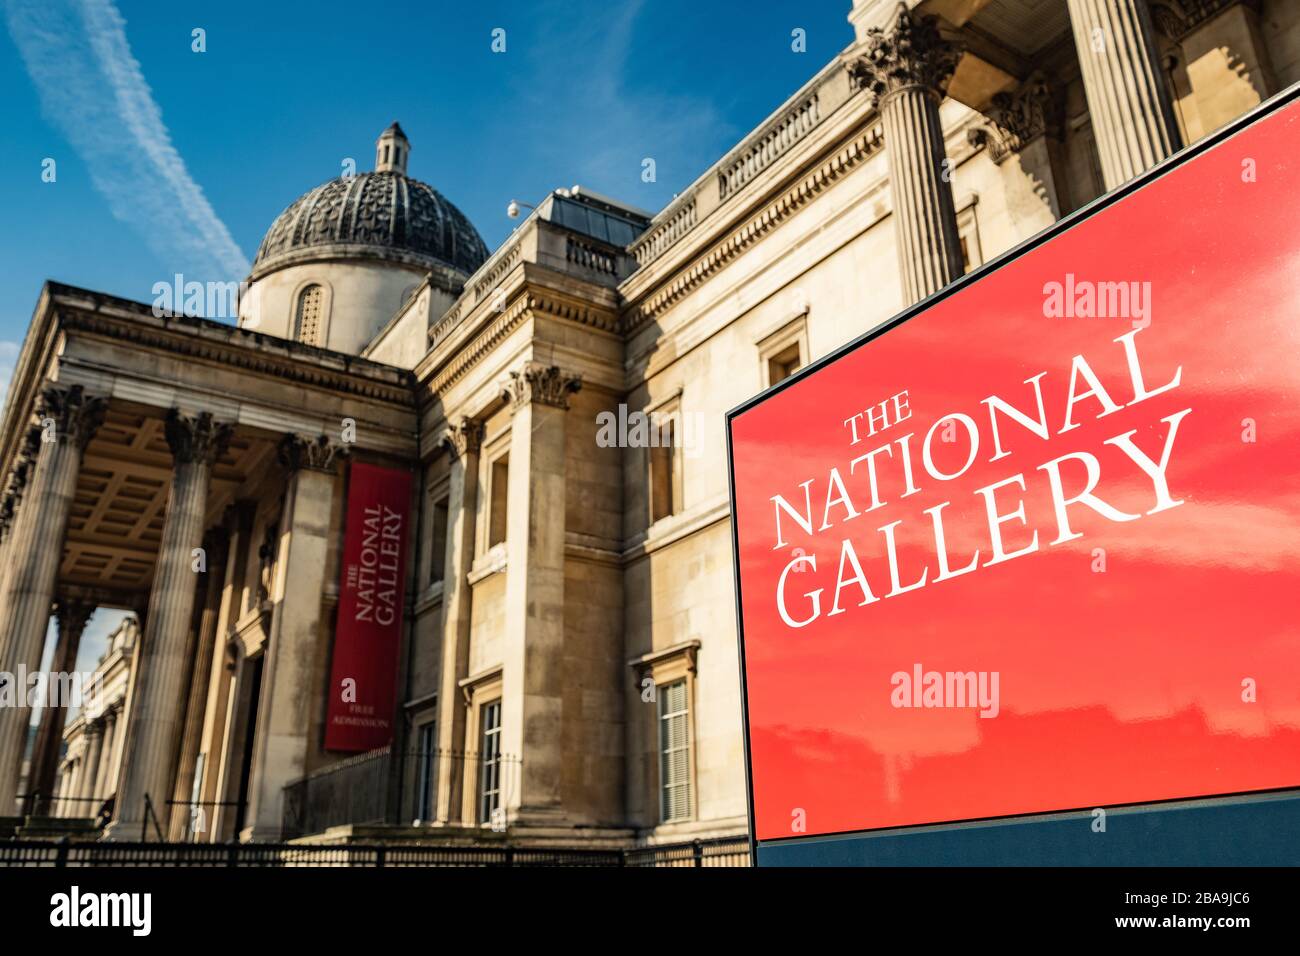 LONDON - MAI 2019: Die National Portrait Gallery am Trafalgar Square, einem weltberühmten Landmark-Gebiet im Londoner West End Stockfoto